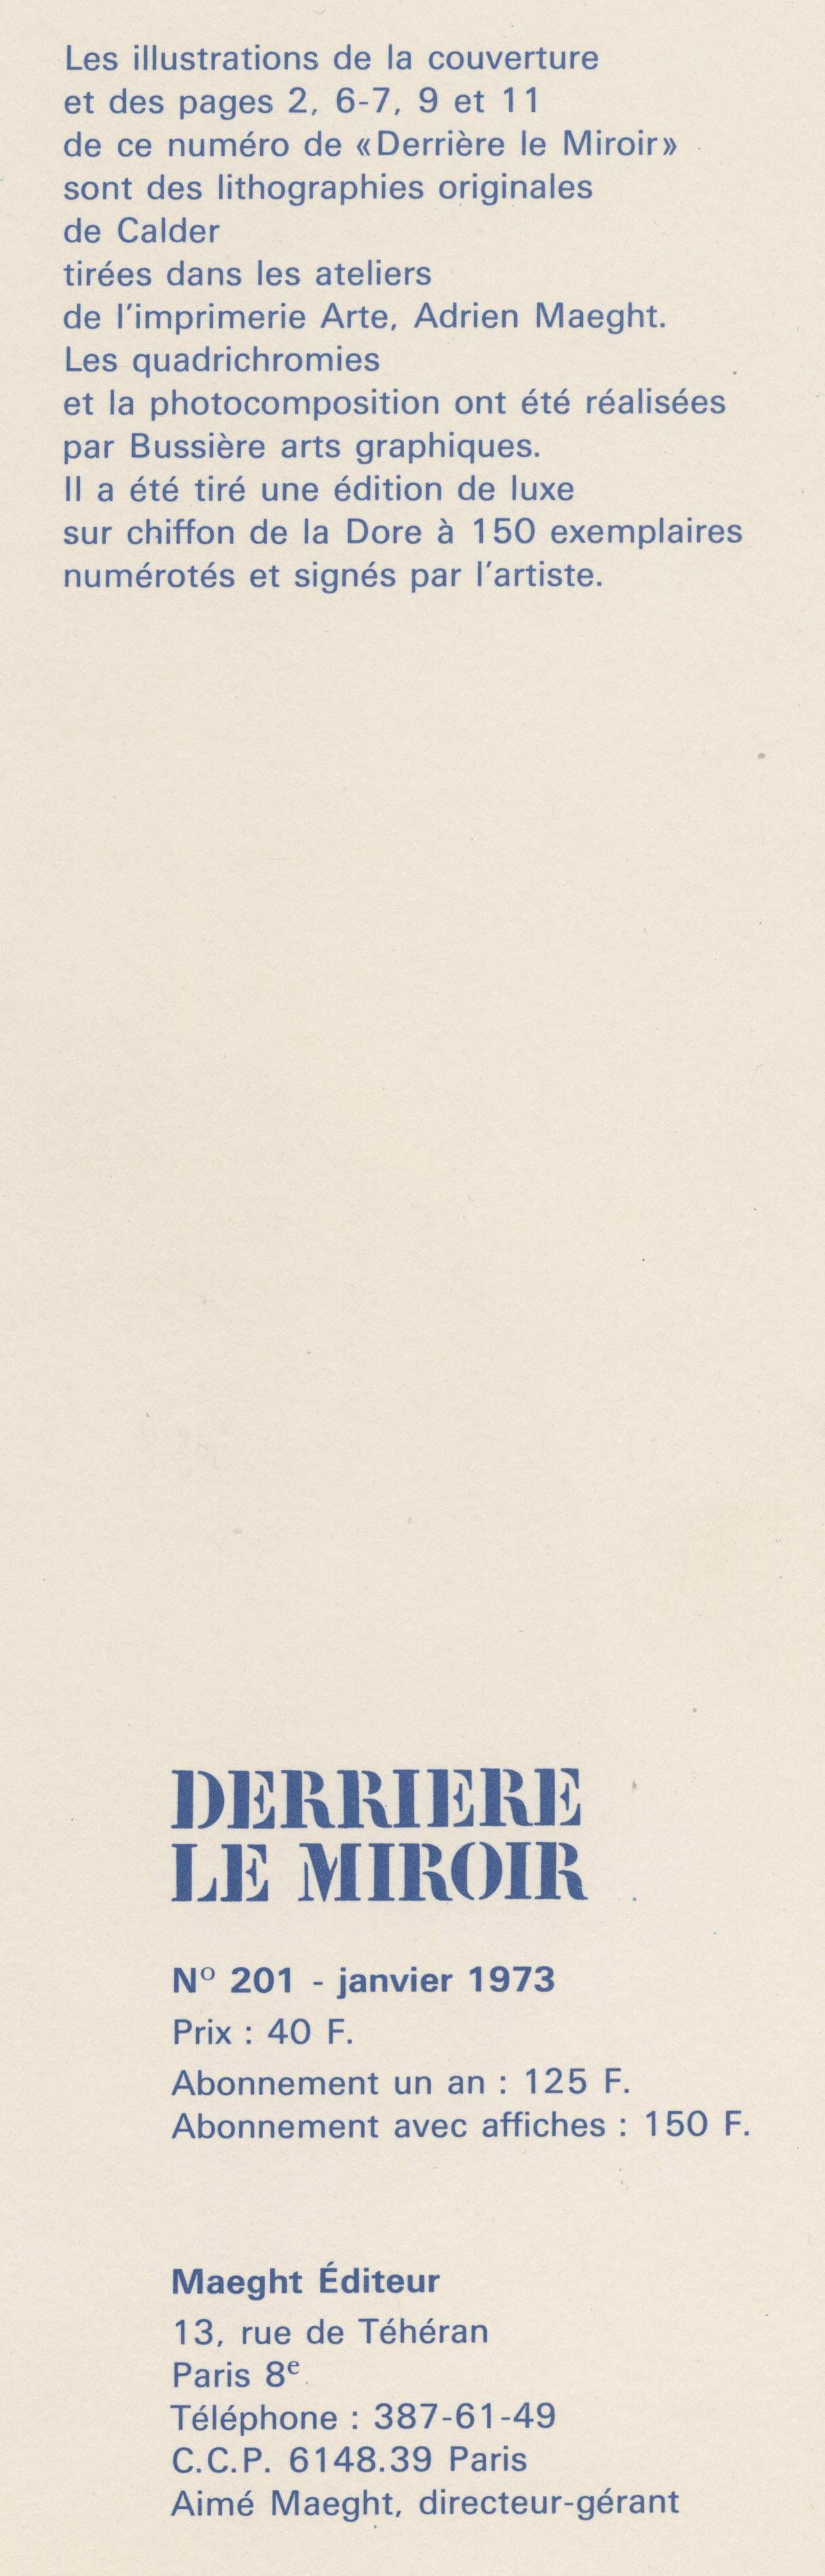 Derriere Le Miroir - Seite 6-7
Farblithographie, 1973
Unsigniert (wie ausgegeben)
Aus: Derriere Le Miroir, Nr. 201, Januar 1973
Verlag: Maeght Editeur, Paris
Drucker: L'Imprimerie Arte, Adrien Maeght
Auflage: Groß (nicht spezifiziert)
Es gibt auch